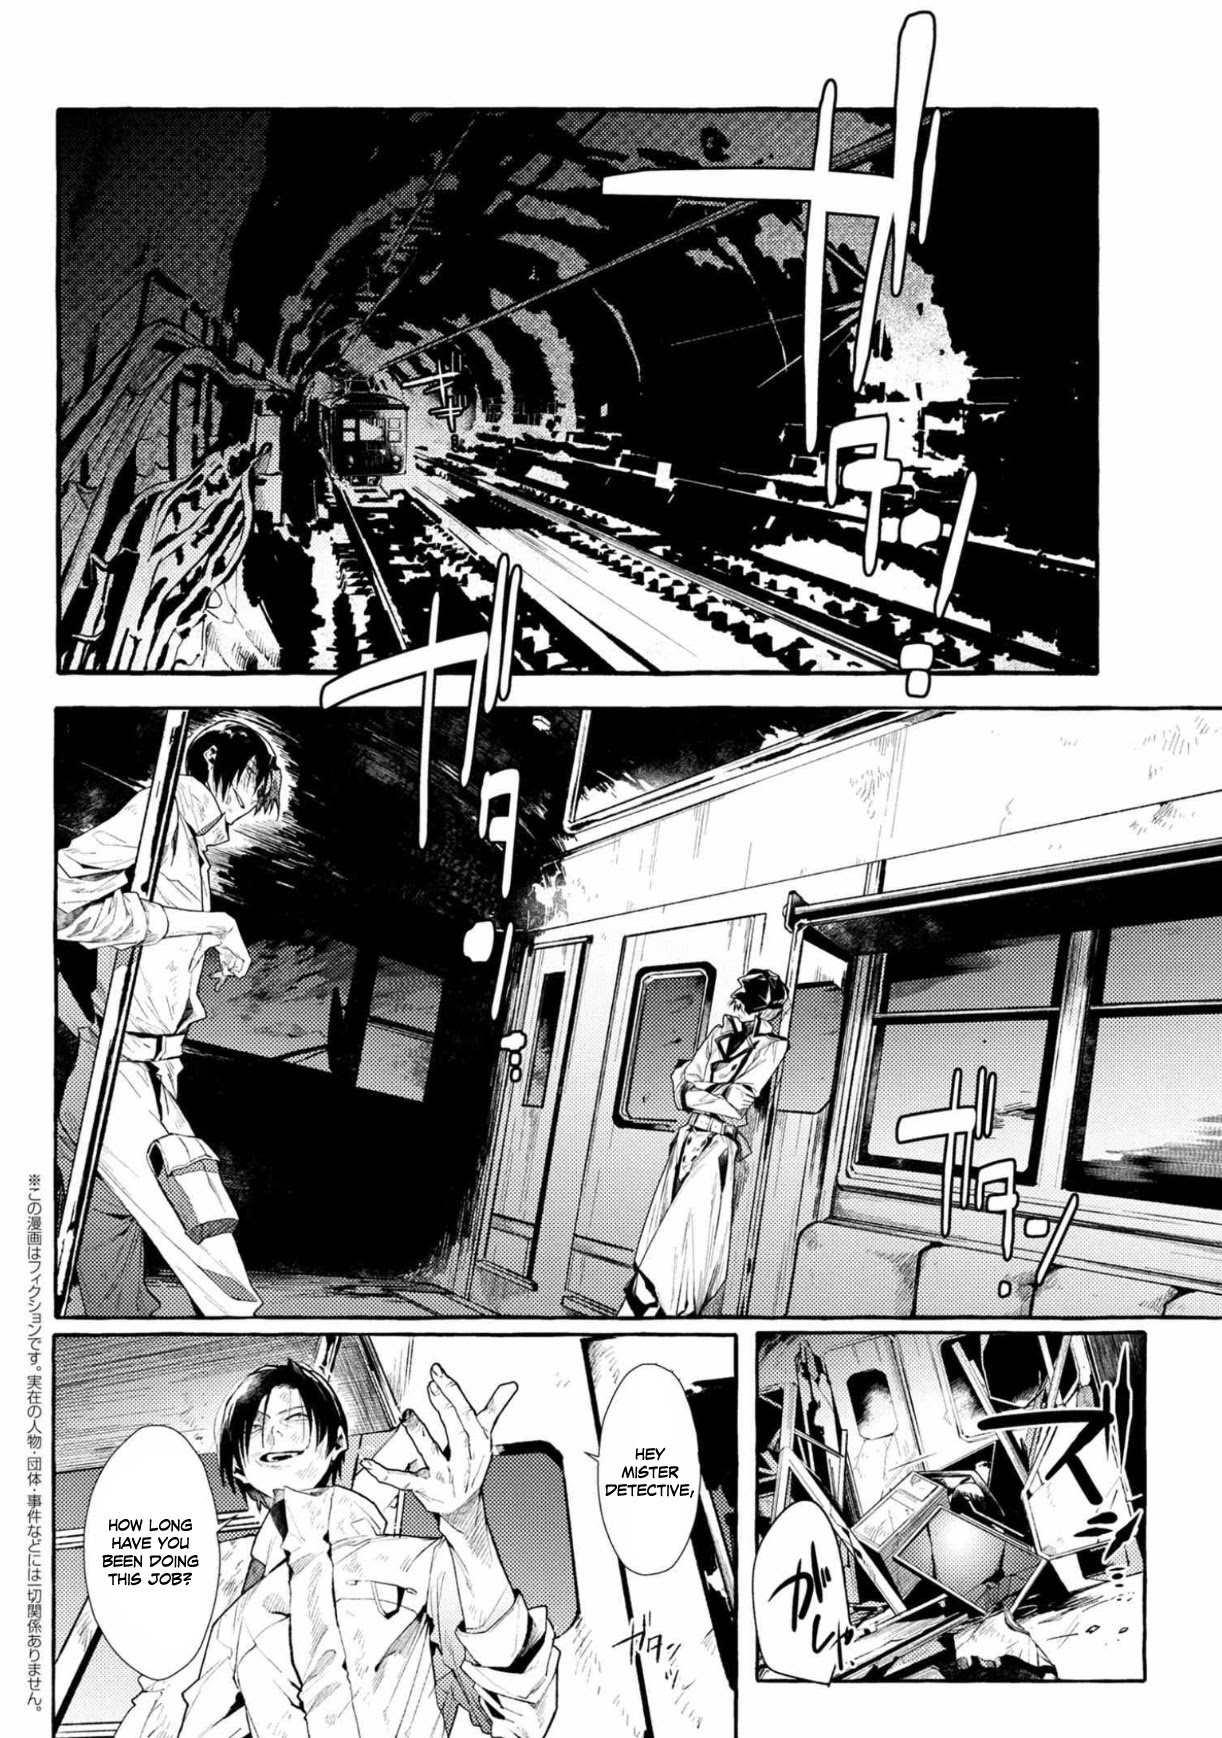 Bungou Stray Dogs Gaiden: Ayatsuji Yukito Vs. Kyougoku Natsuhiko Chapter 8.1: Act 5: Inside The Passenger Train/noon/cloudy① - Picture 2